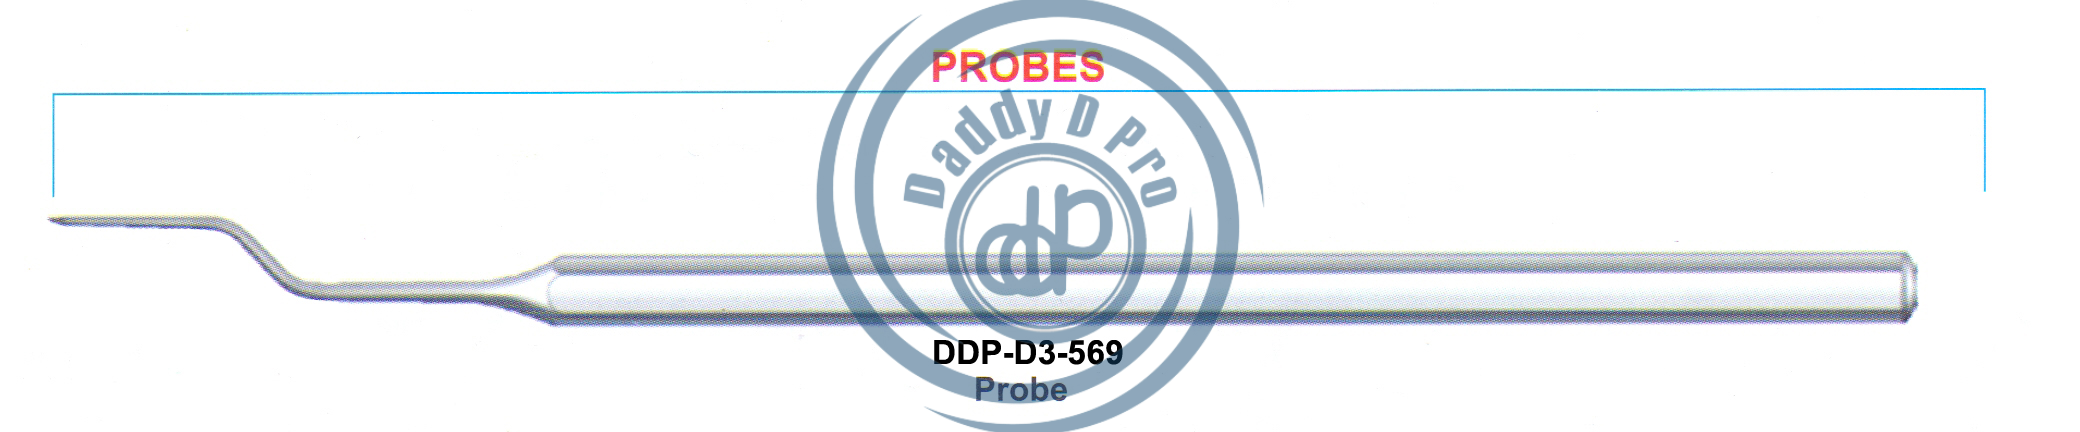 images/DDP-D3-569.png